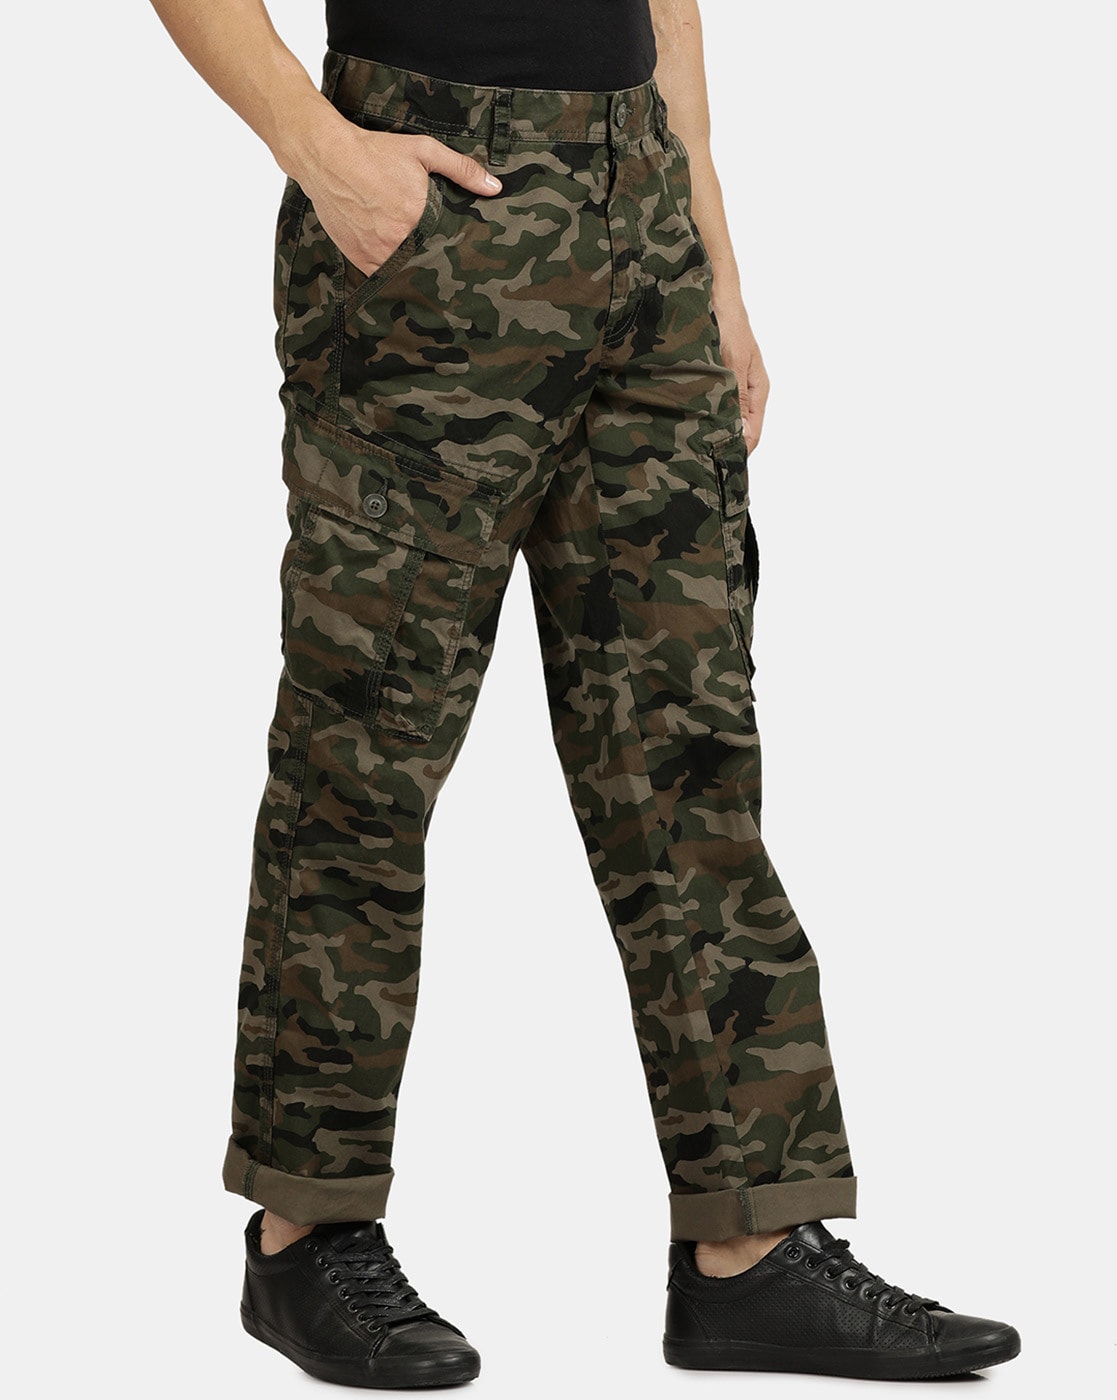 Nike SB Flex/Real Tree Camo Cargo Pants For MP Male - GTA5-Mods.com